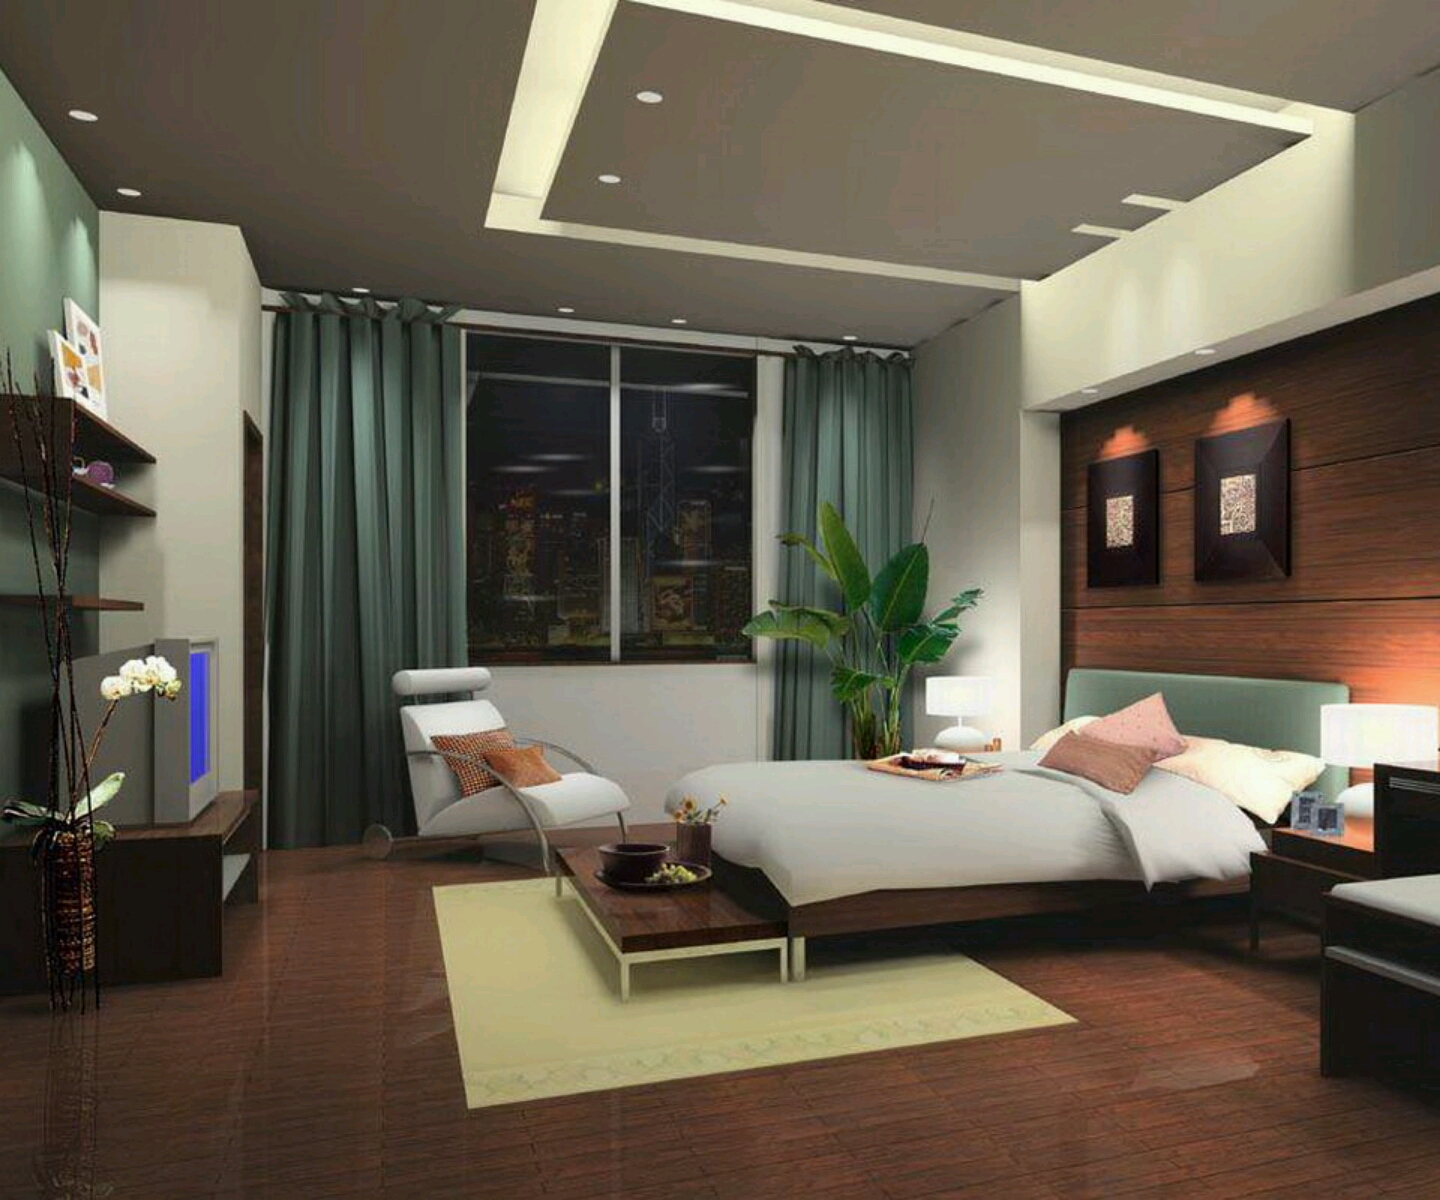 New home designs latest iModerni bedrooms designs best ideas 